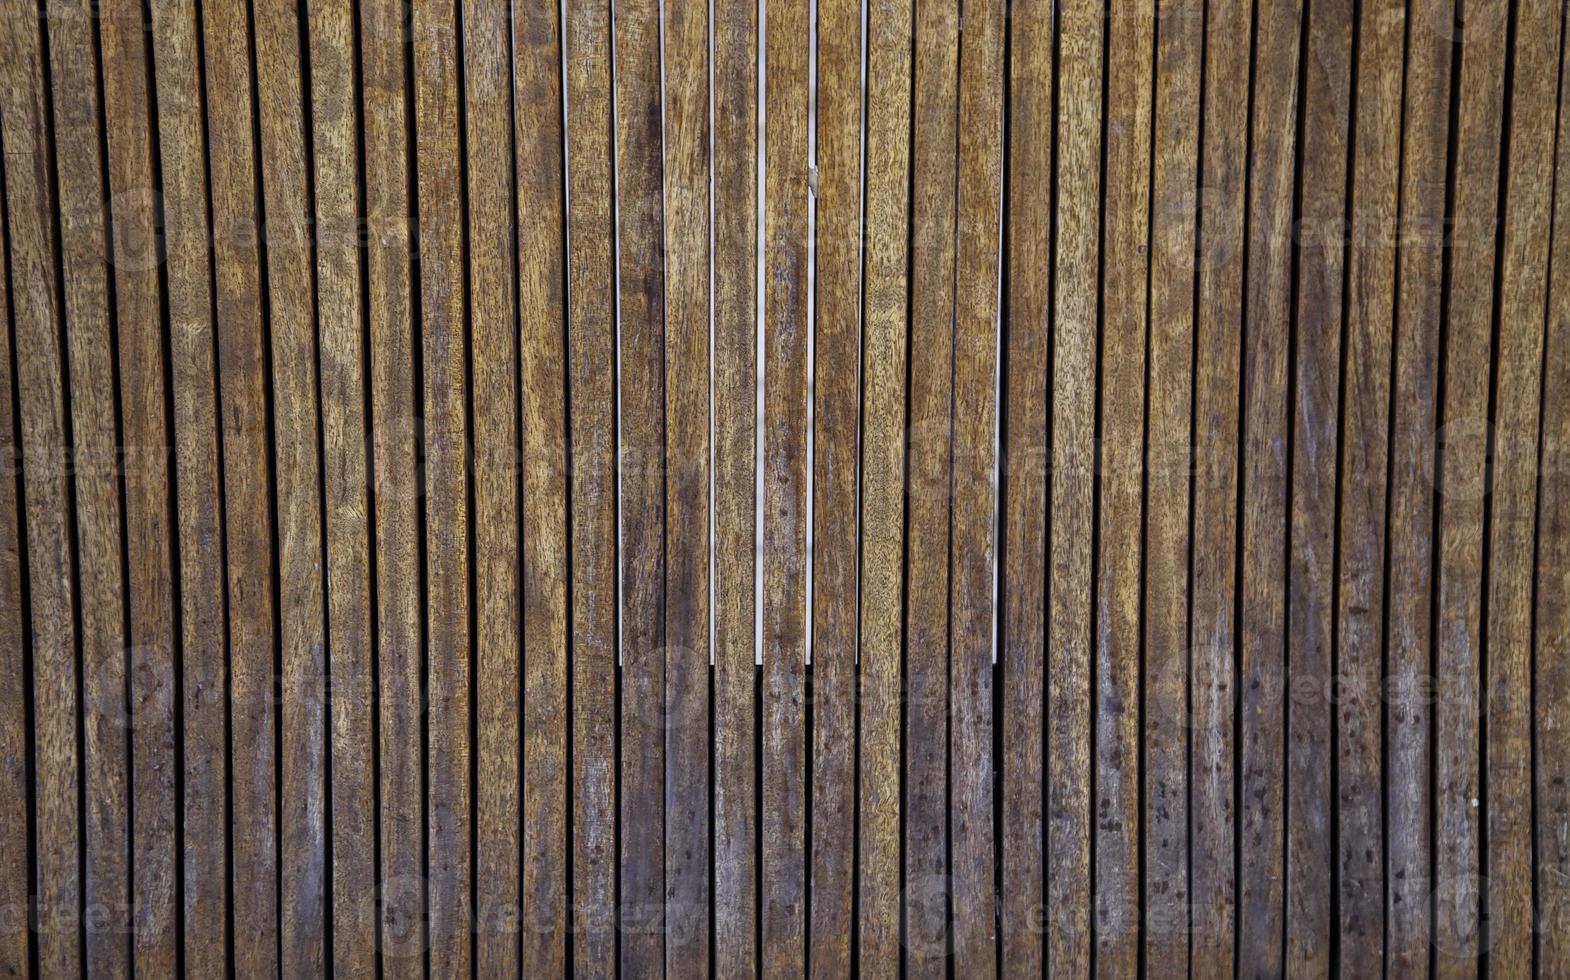 Wood wall texture photo